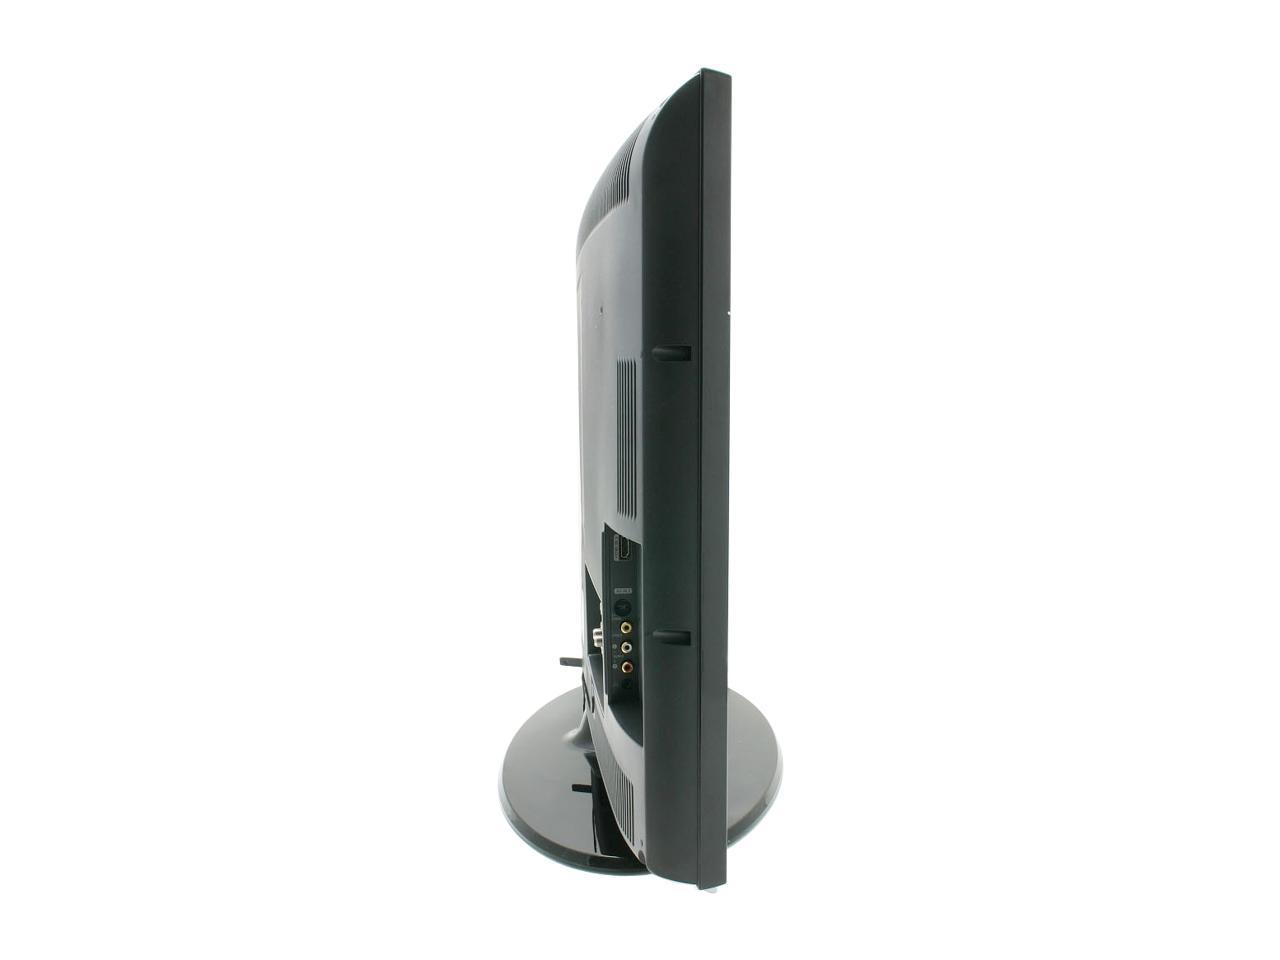 LNT3242HX/XAA Low Profile Ultra-Slim Black Adjustable Tilt/Tilting Wall Mount Bracket for Samsung LN-T3242HX/XAA 32 inch LCD HDTV TV/Television 